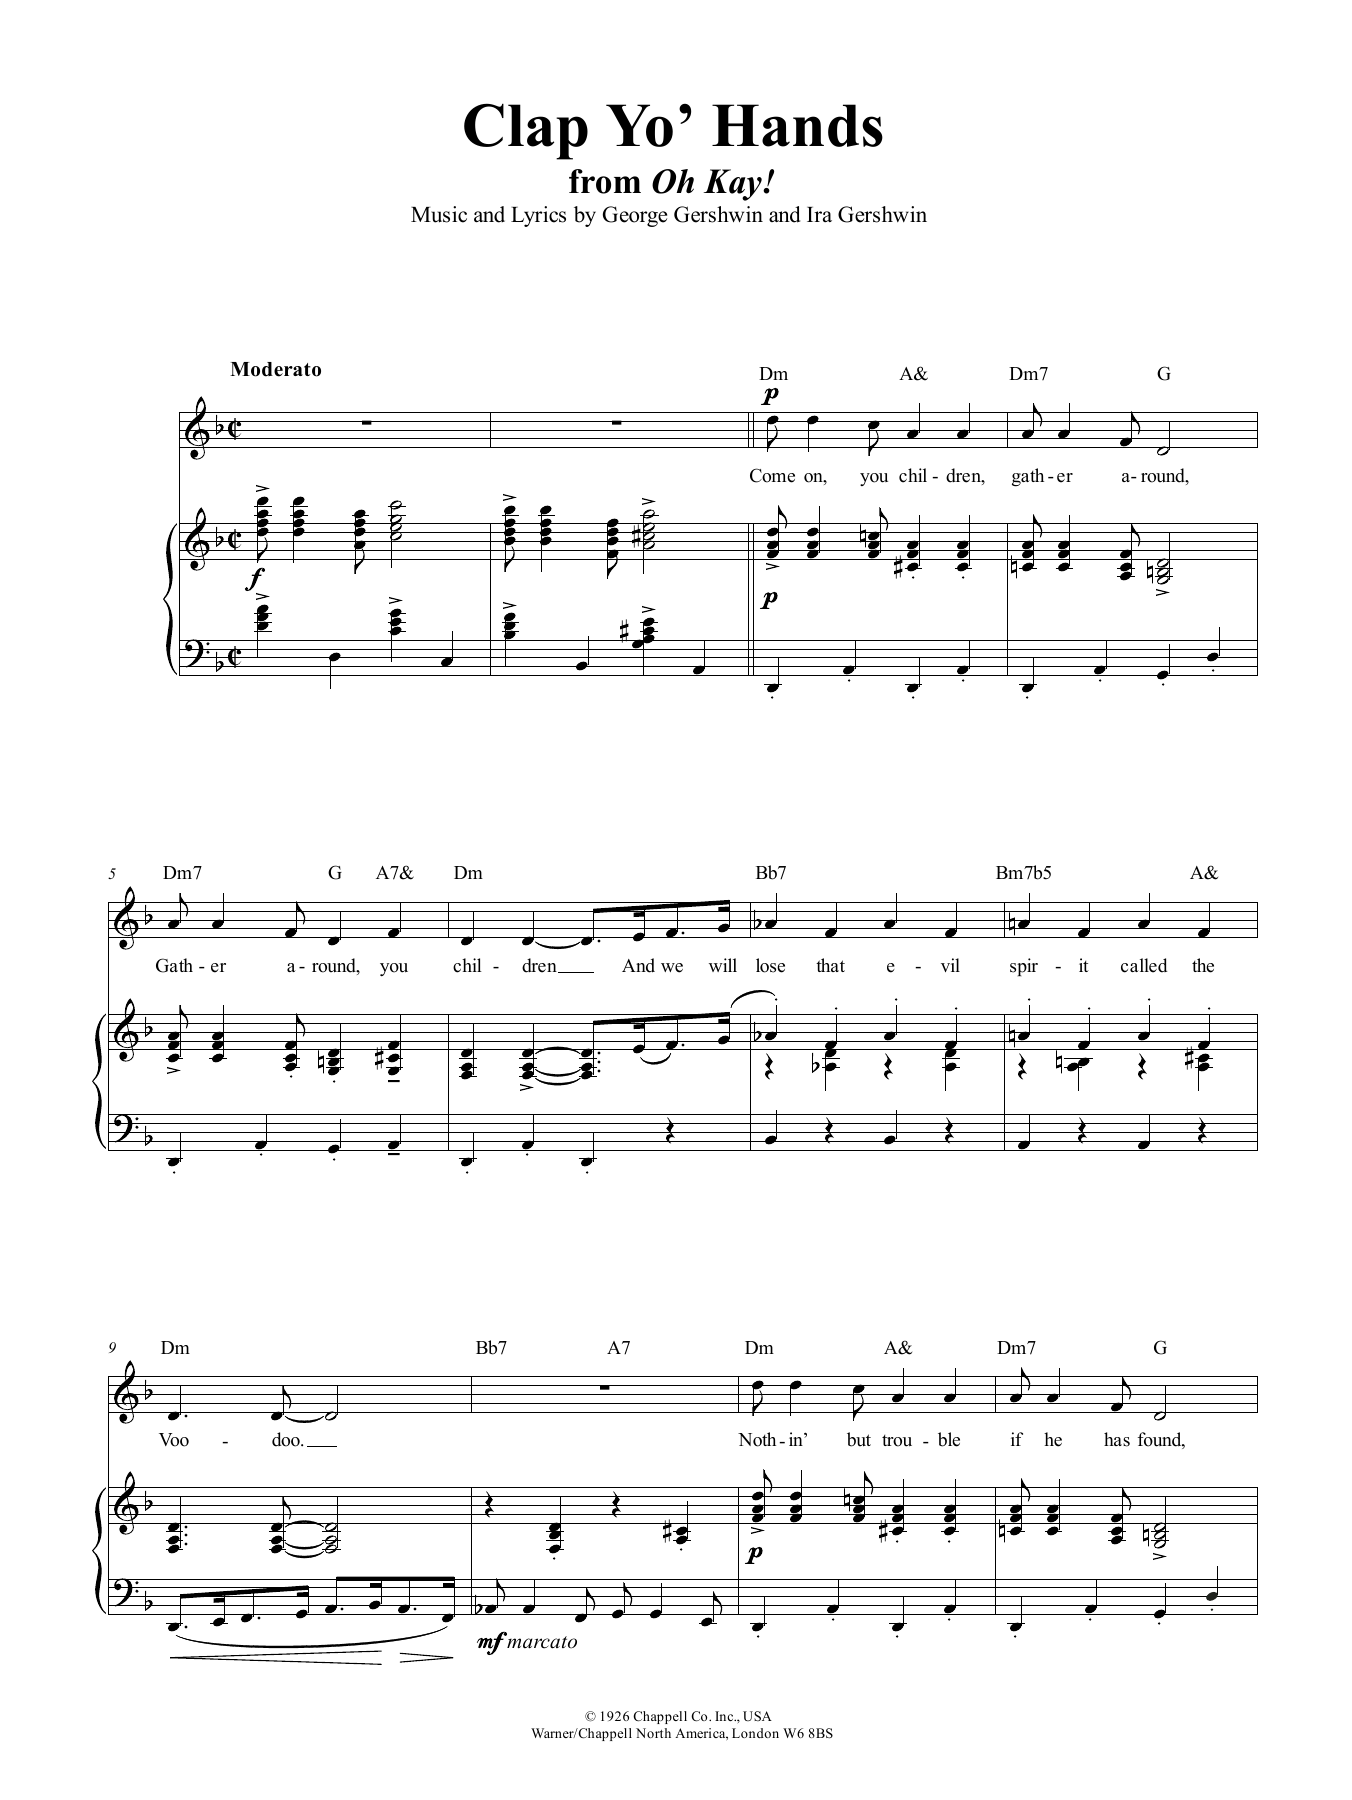 Download George Gershwin Clap Yo' Hands Sheet Music